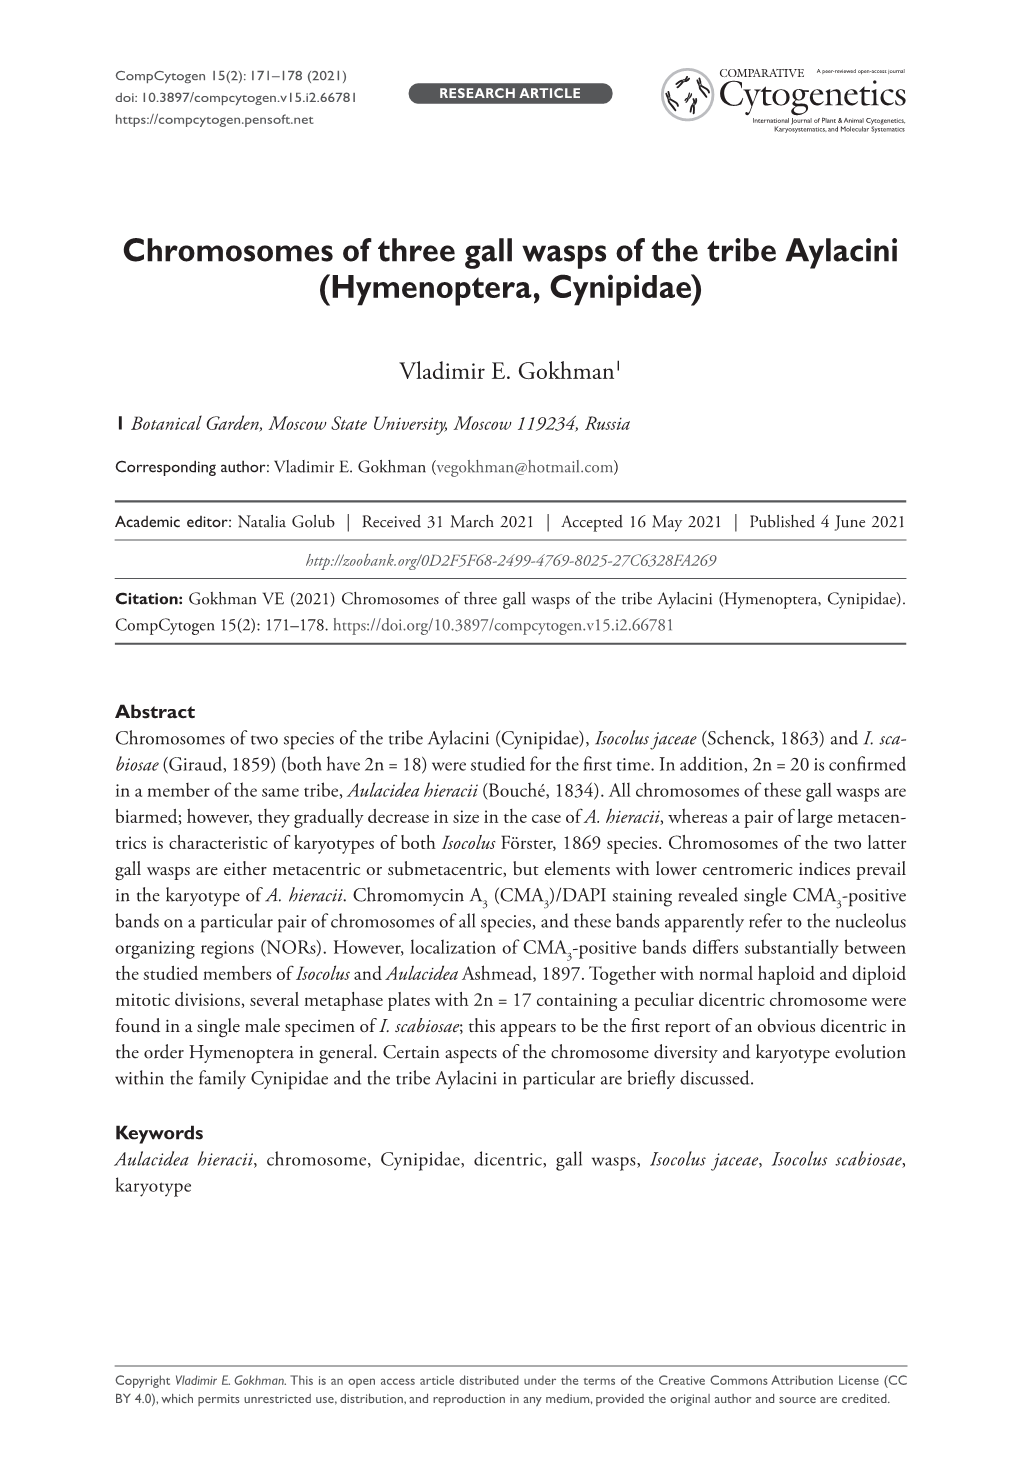 ﻿Chromosomes of Three Gall Wasps of the Tribe Aylacini (Hymenoptera